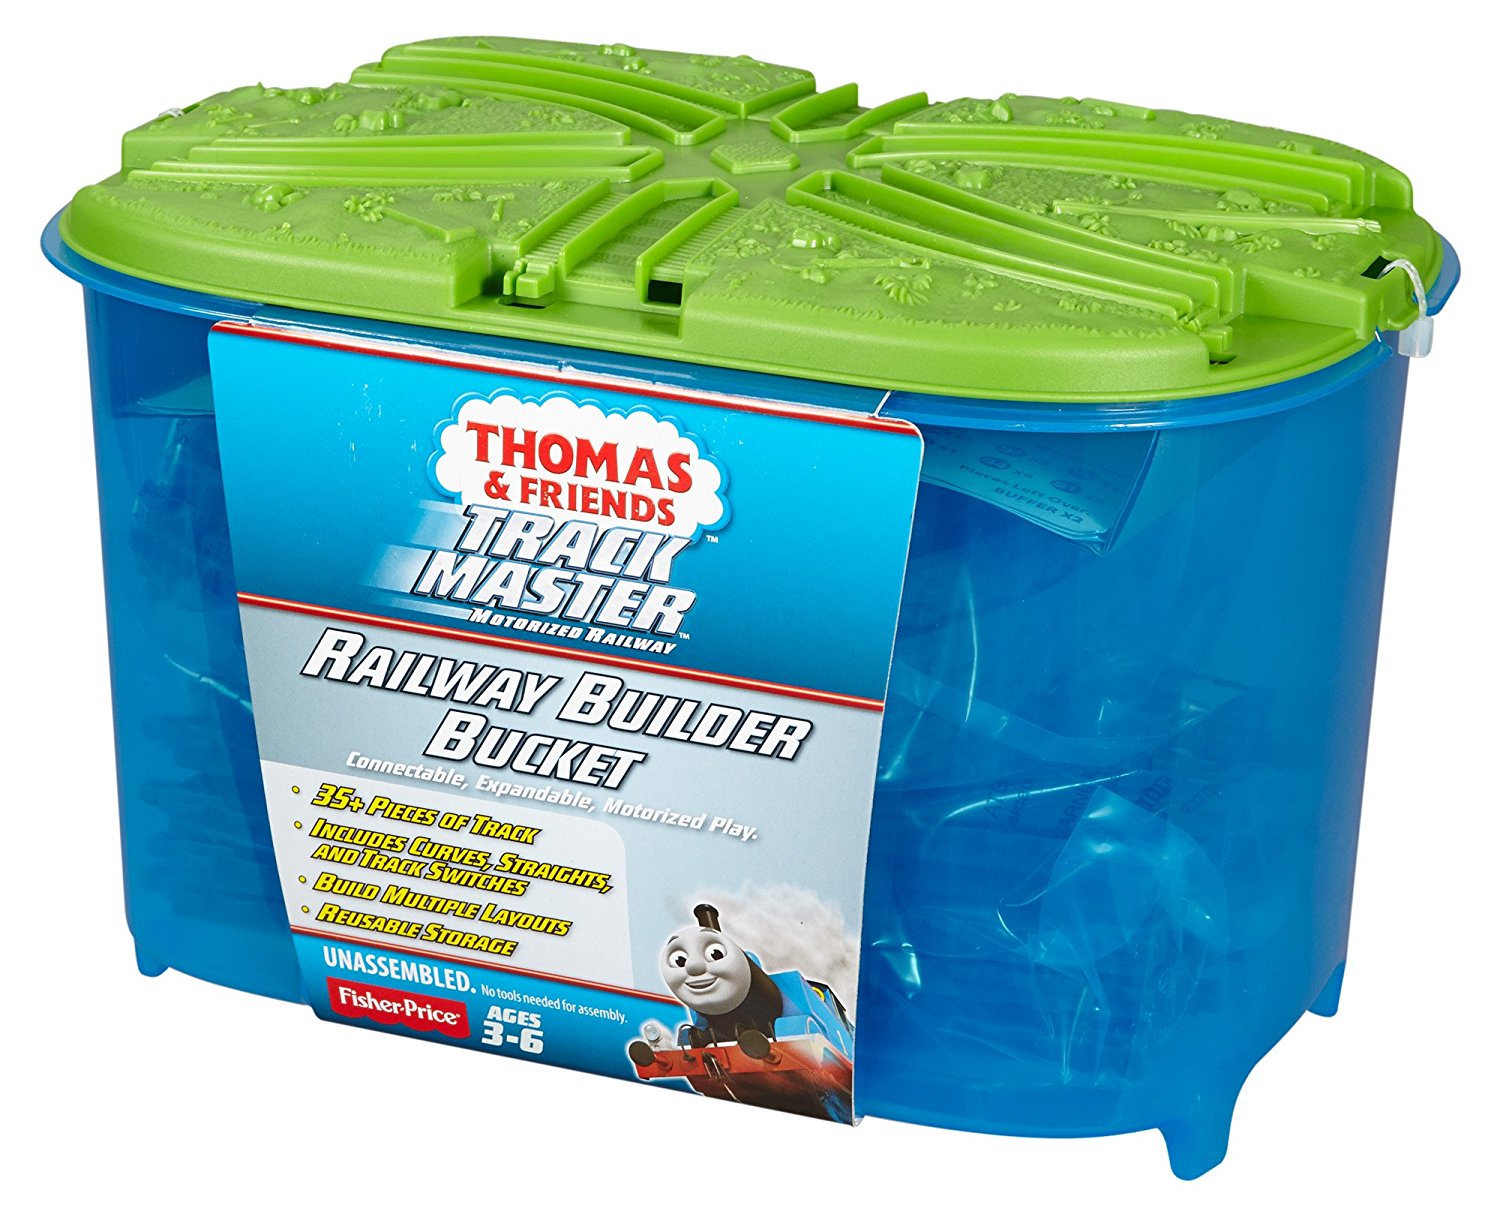 Fisher-Price Thomas & Friends TrackMaster Railway Builder Bucket – Just $12.74!